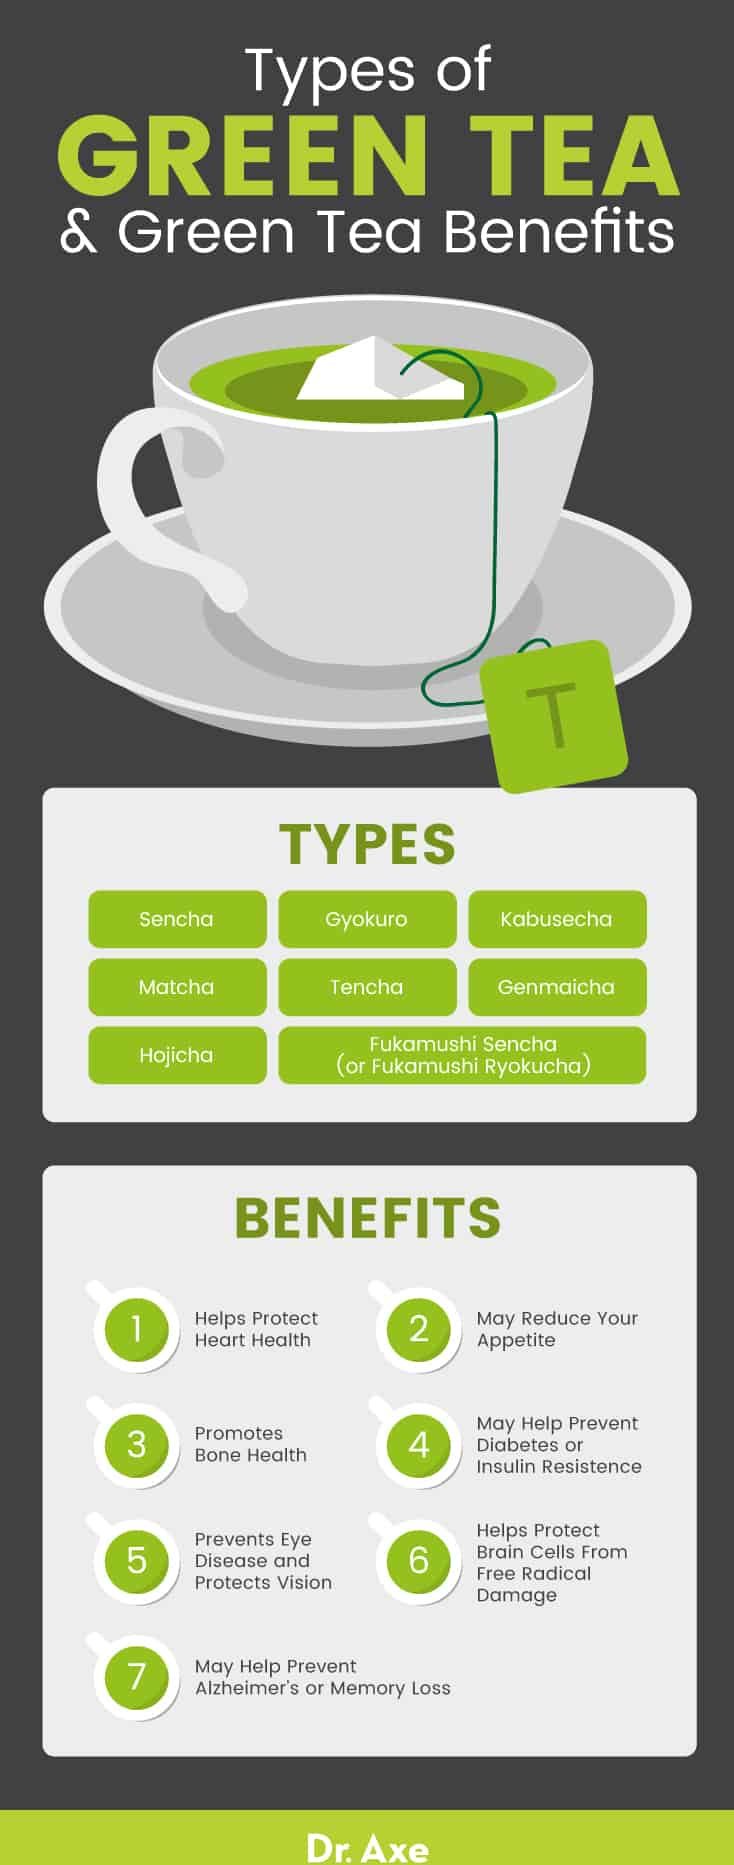 Types of green tea + green tea benefits - Dr. Axe